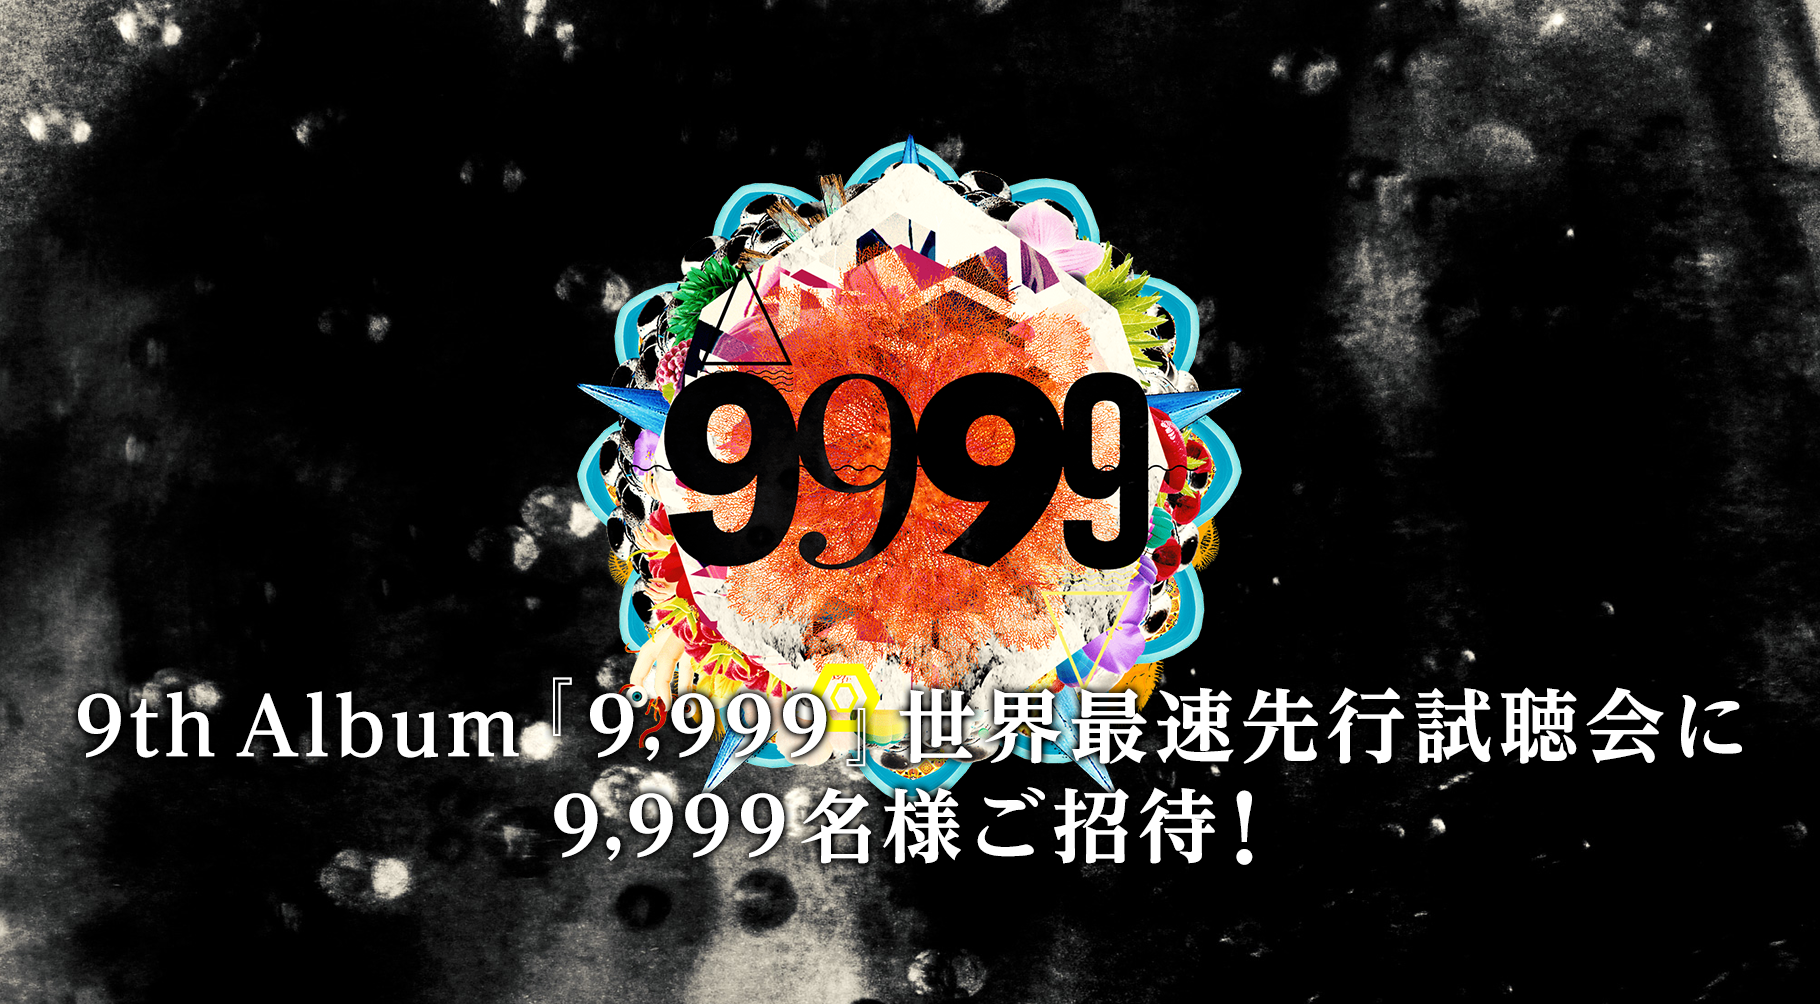 9th Album『9999』世界最速先行試聴会に9